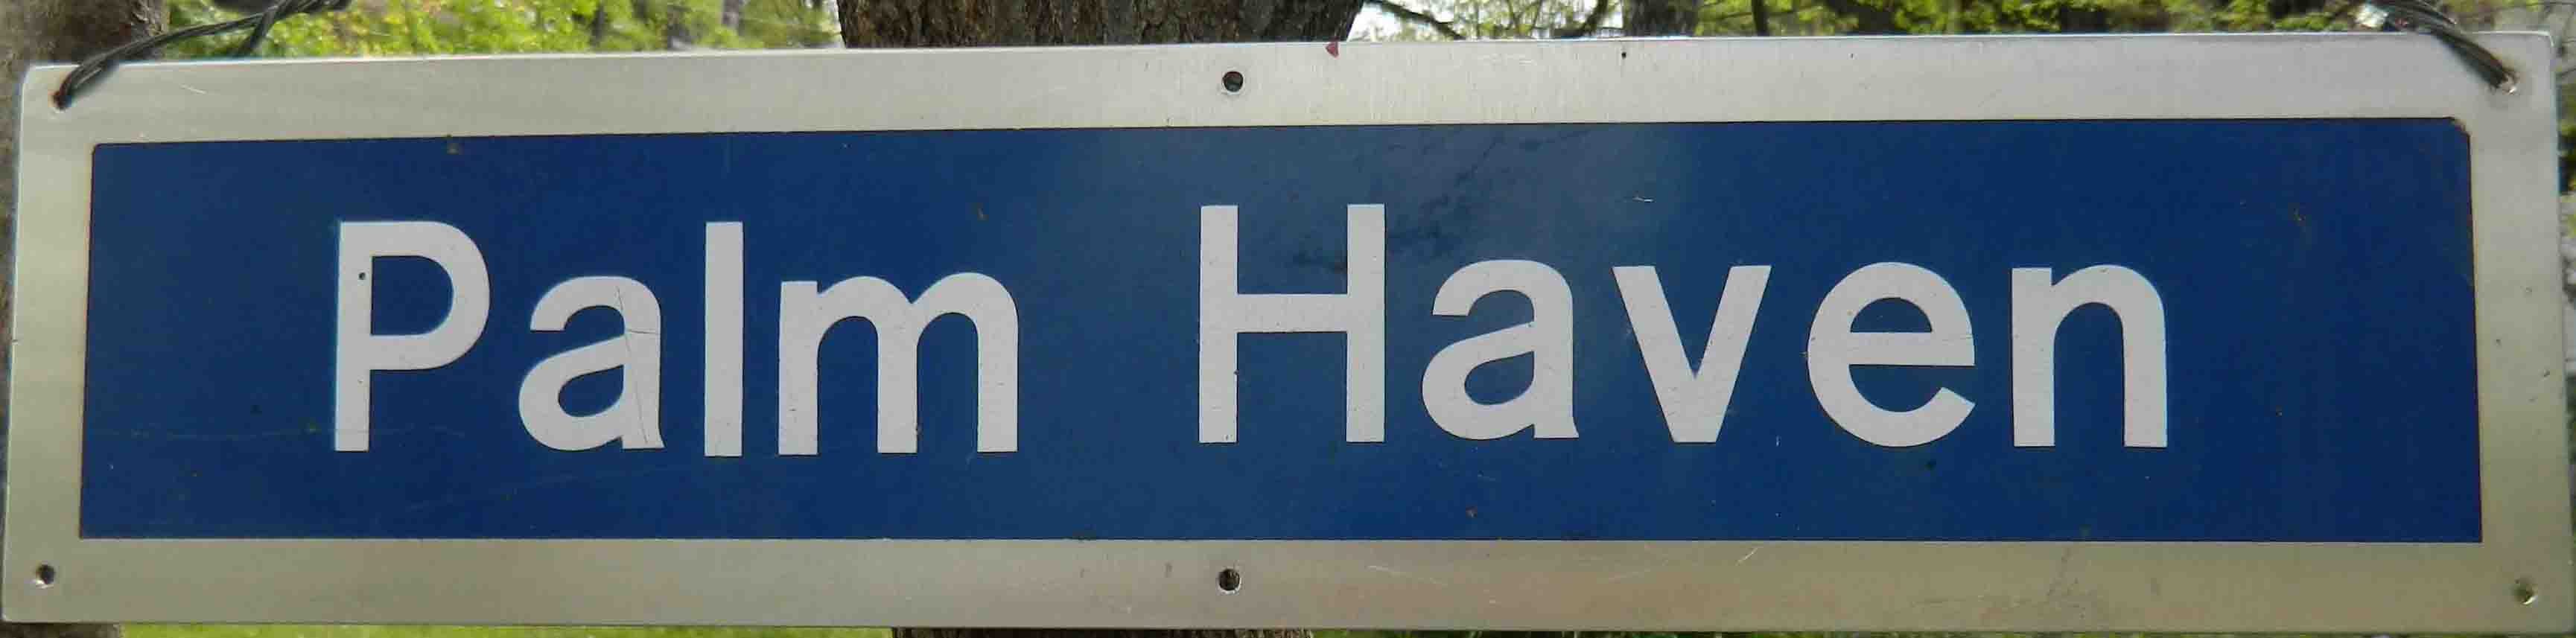 Palm Haven sign-2_edited-1 copy.jpg